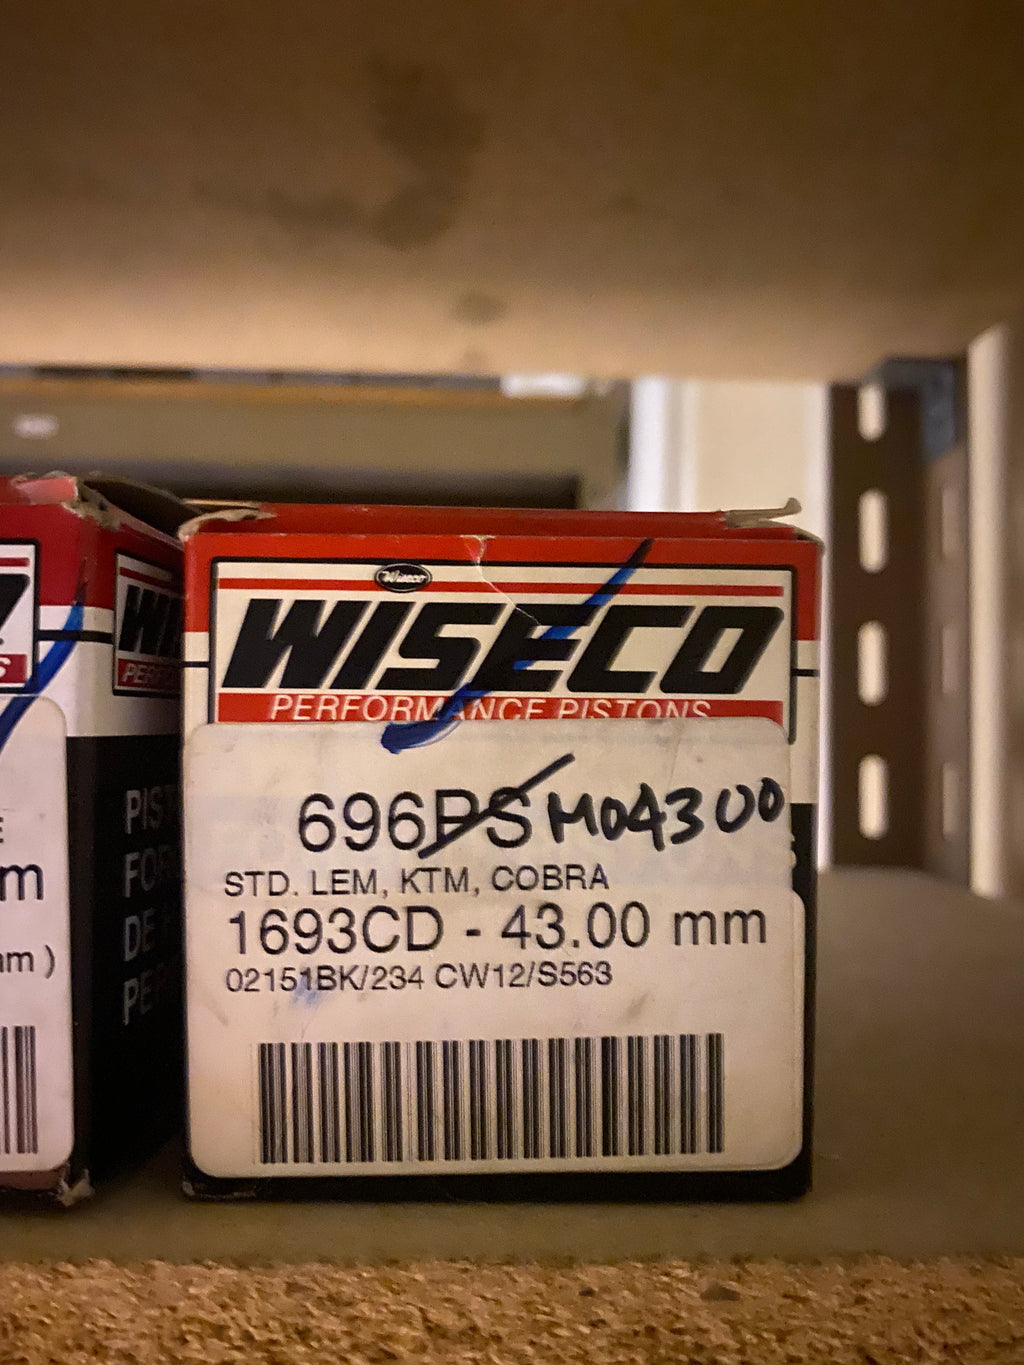 Wiseco Piston Kit 696M04300 STD. LEM, KTM, Cobra 1693CD